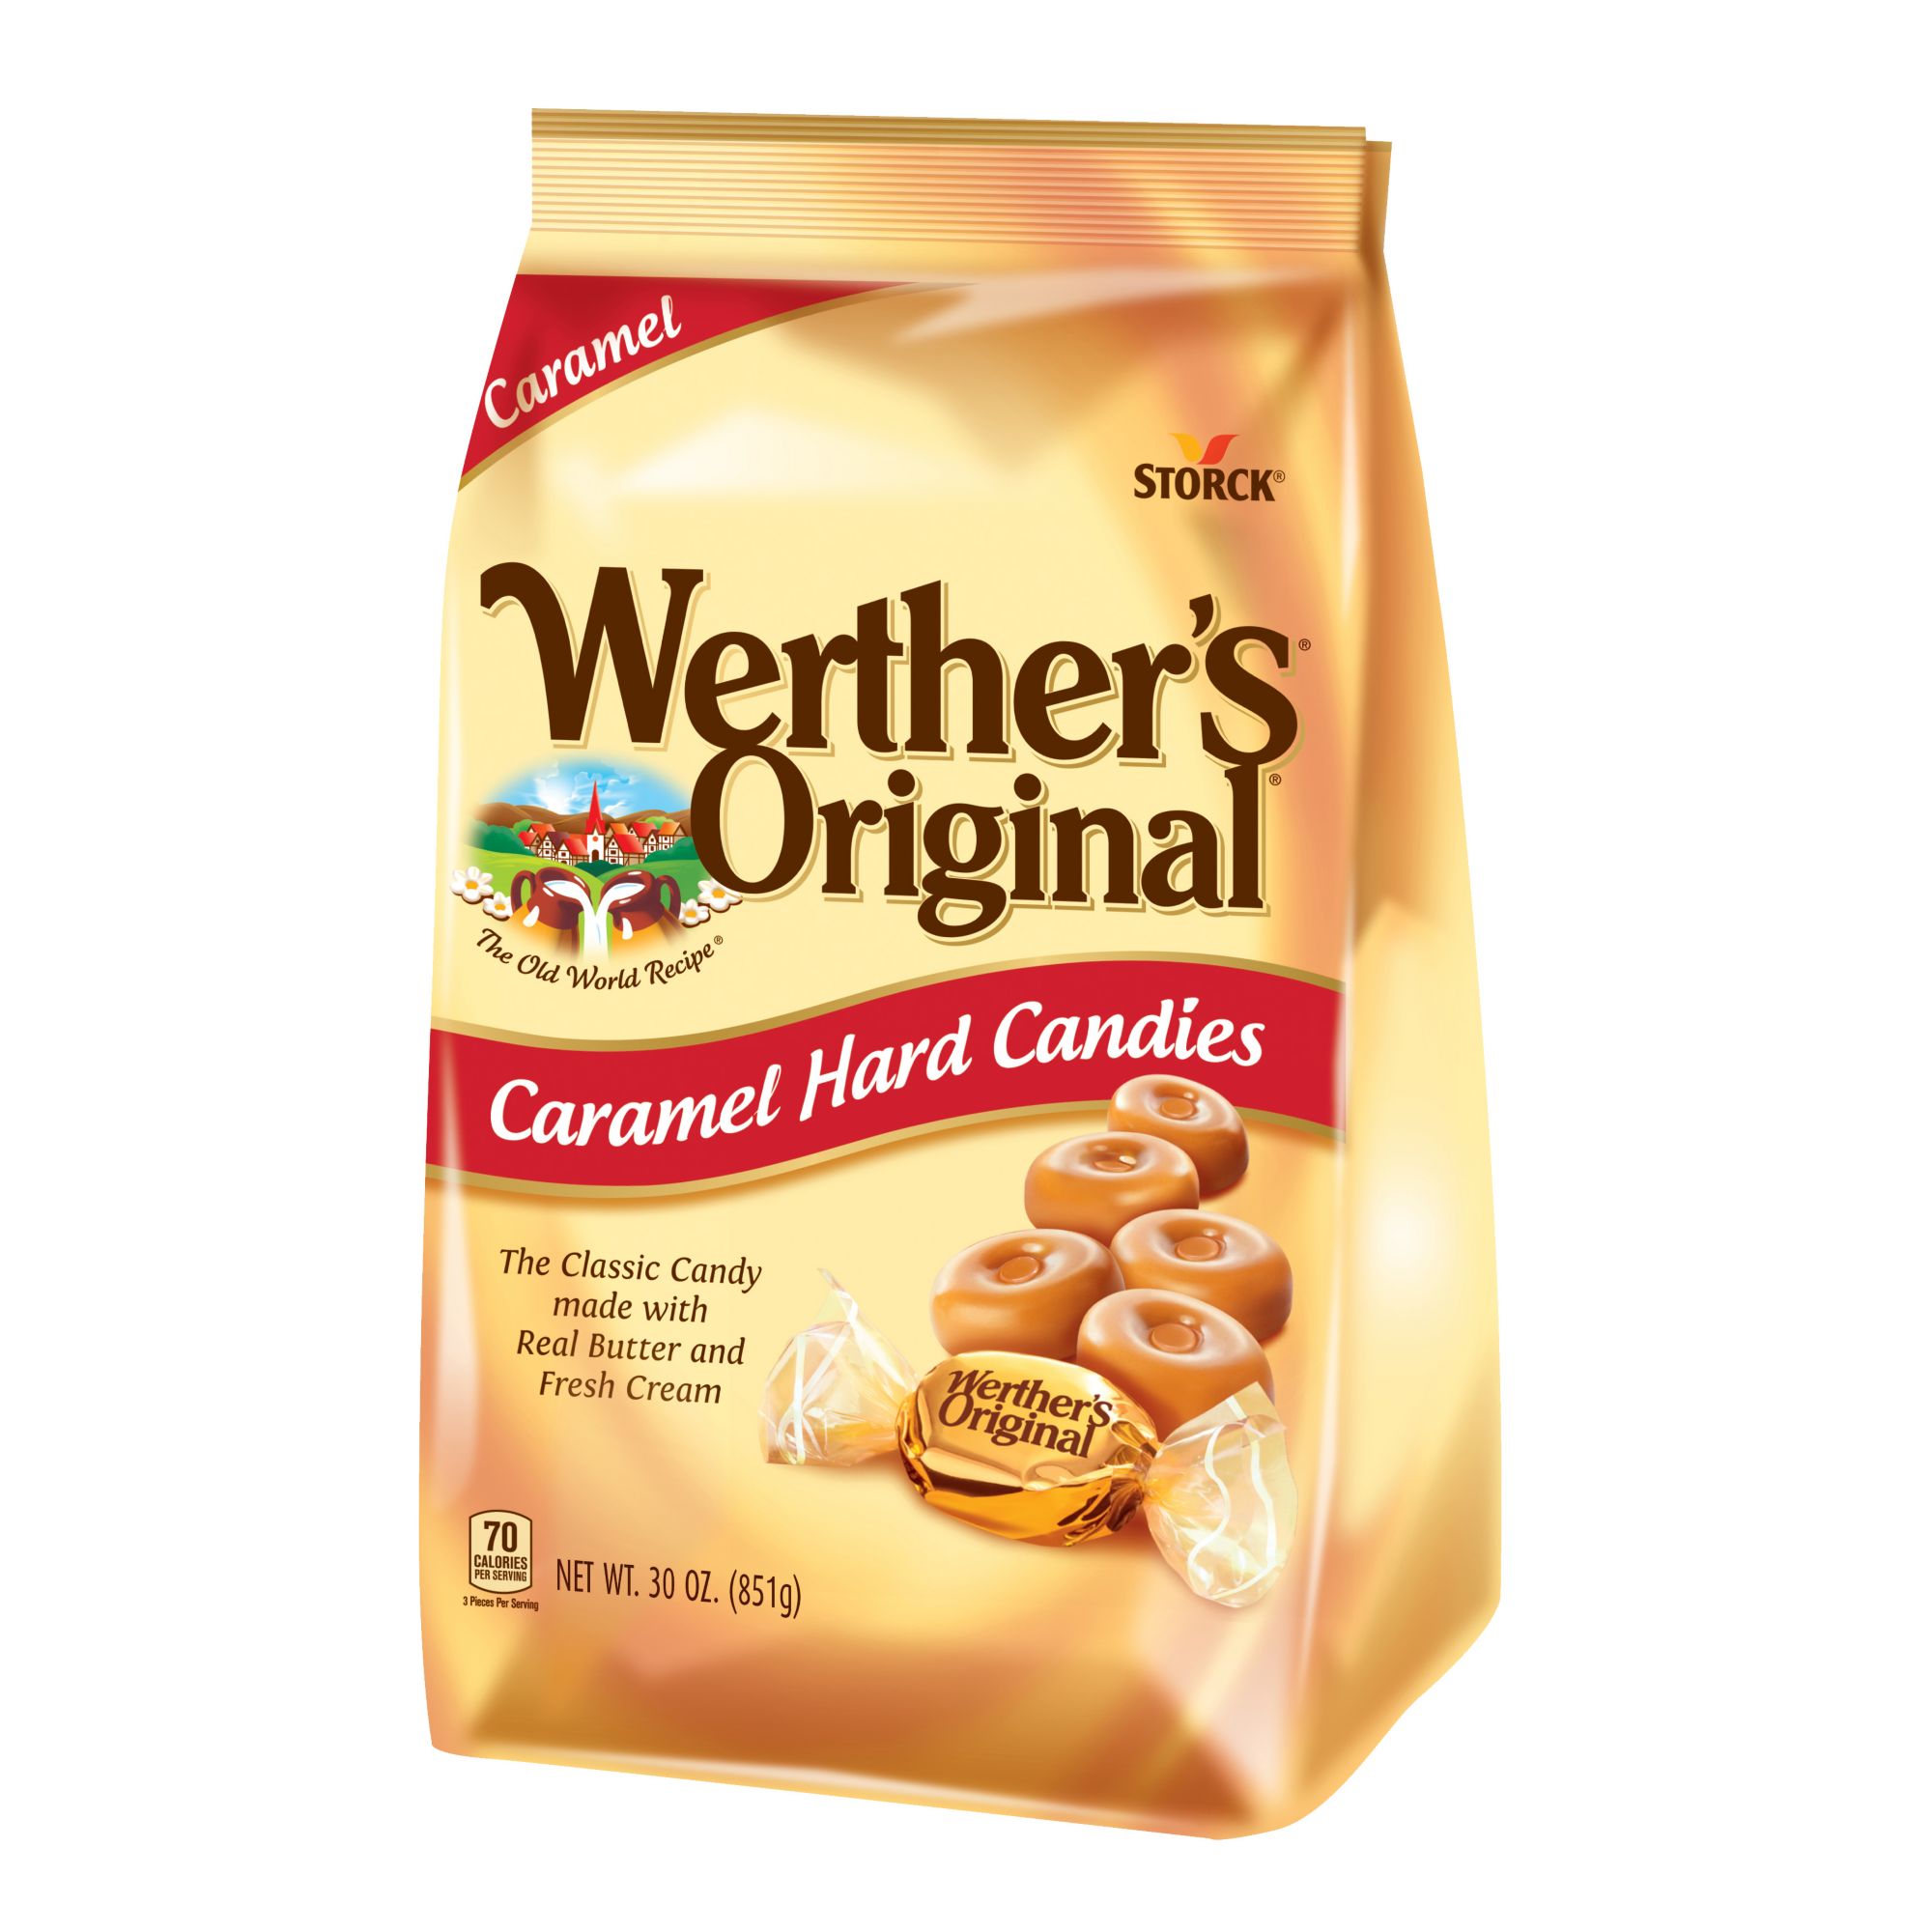 Werther's Original Caramel Hard Candies